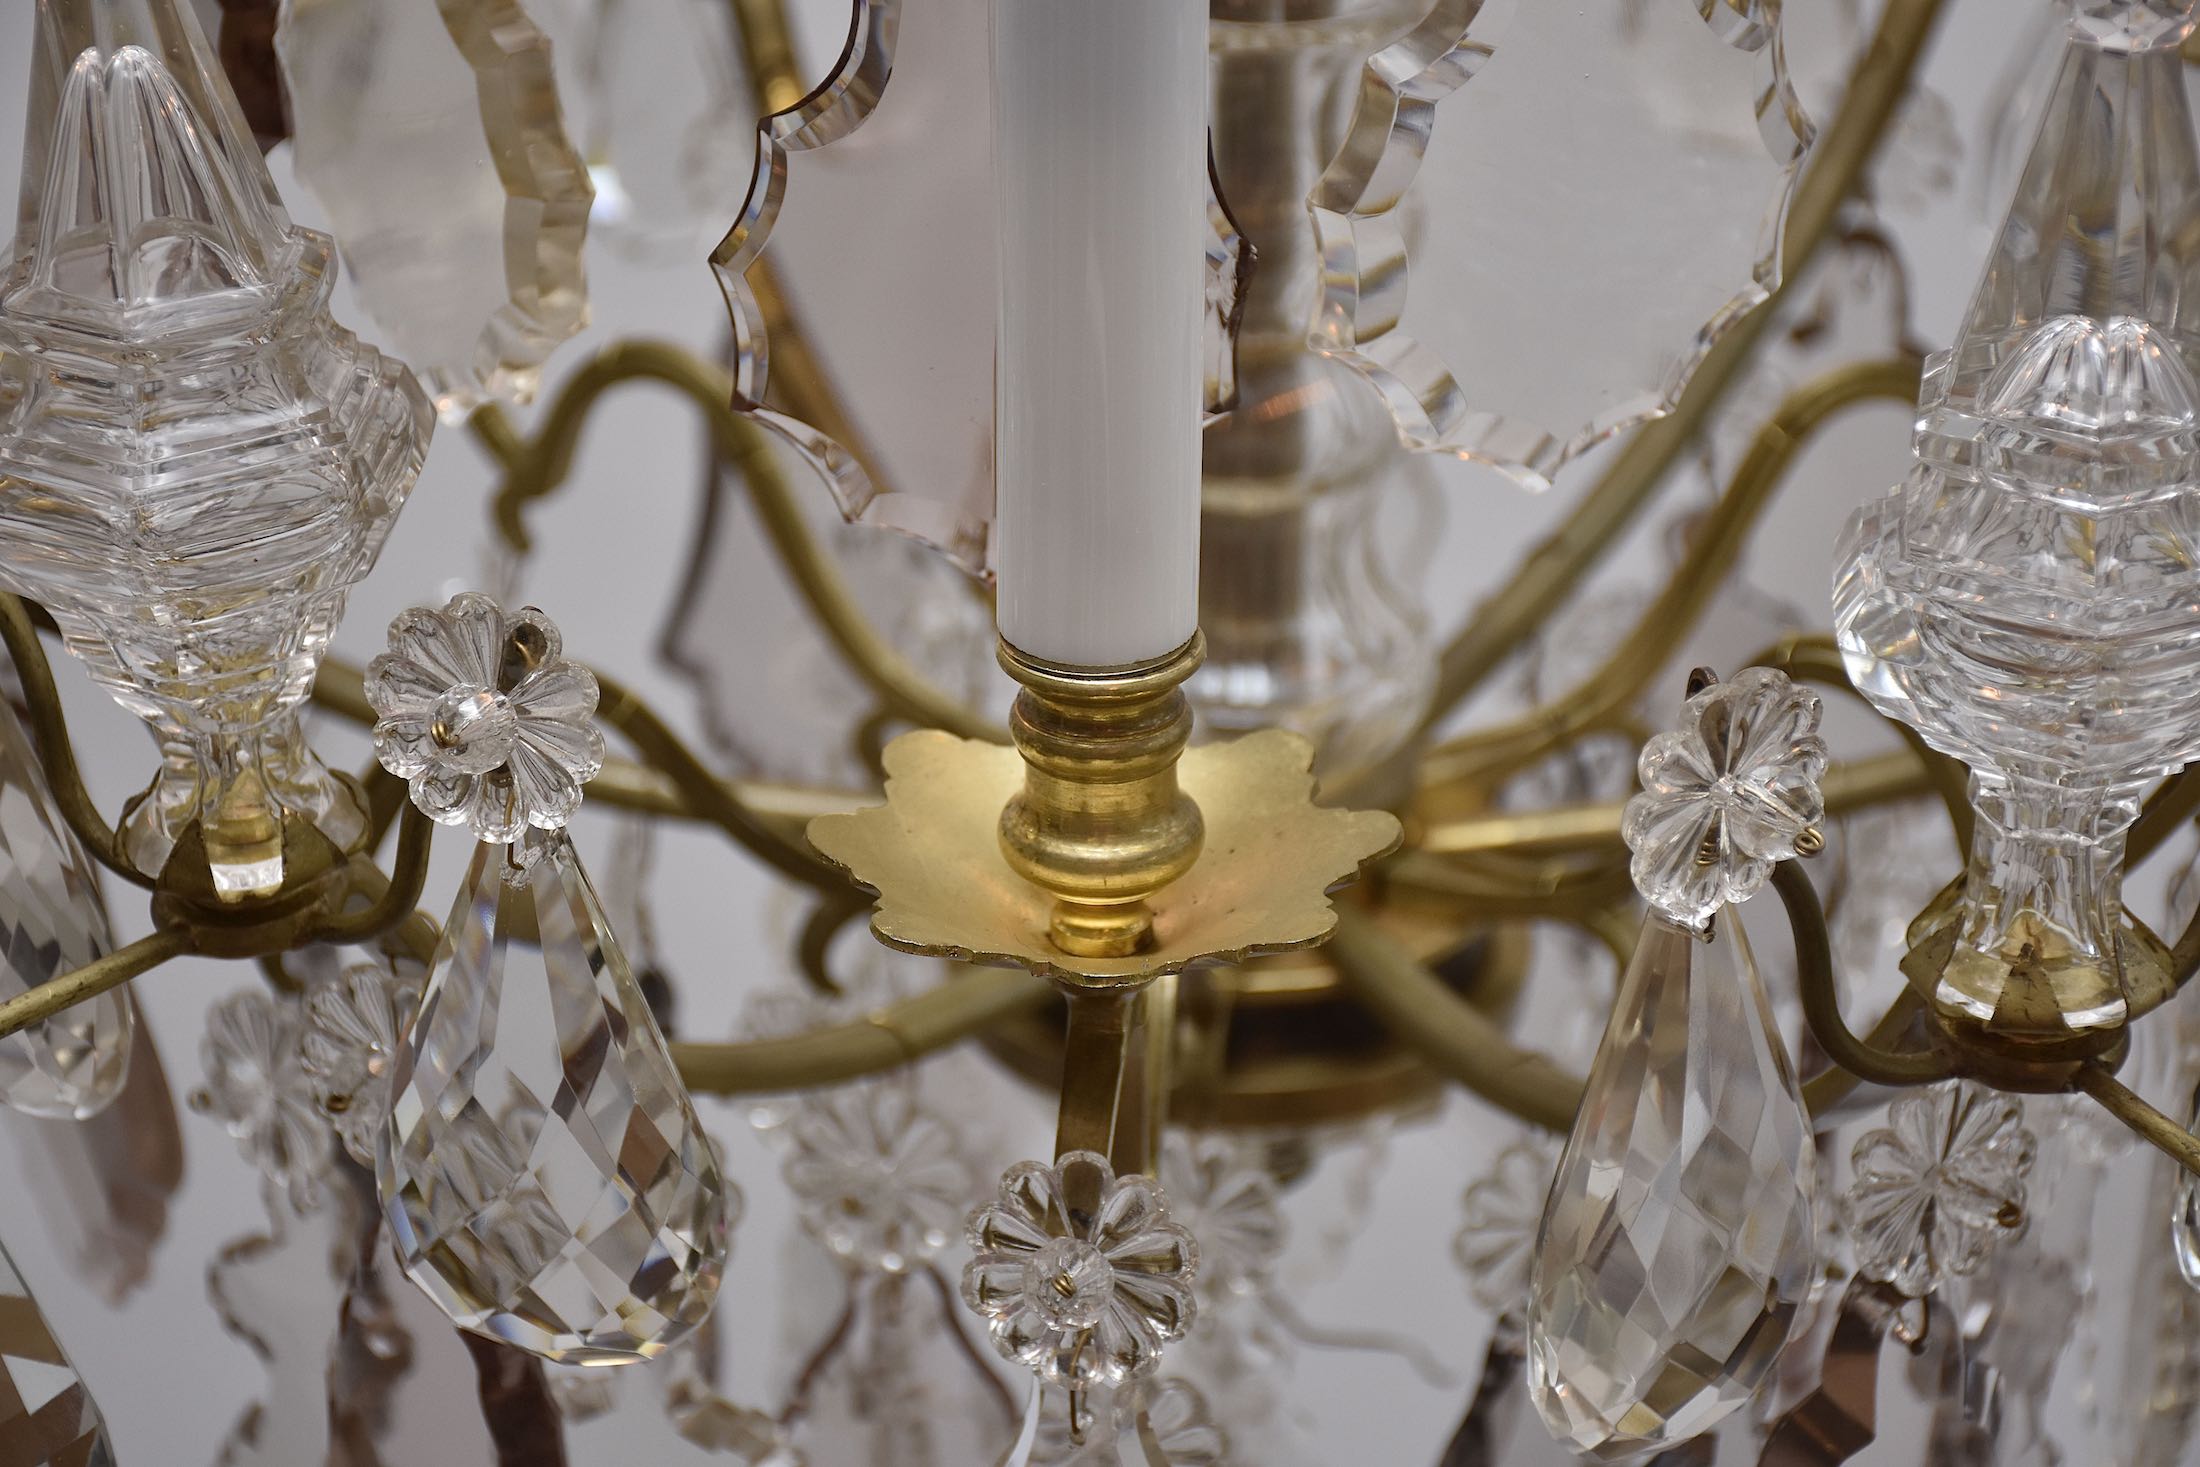 19th c. gilt bronze French chandelier